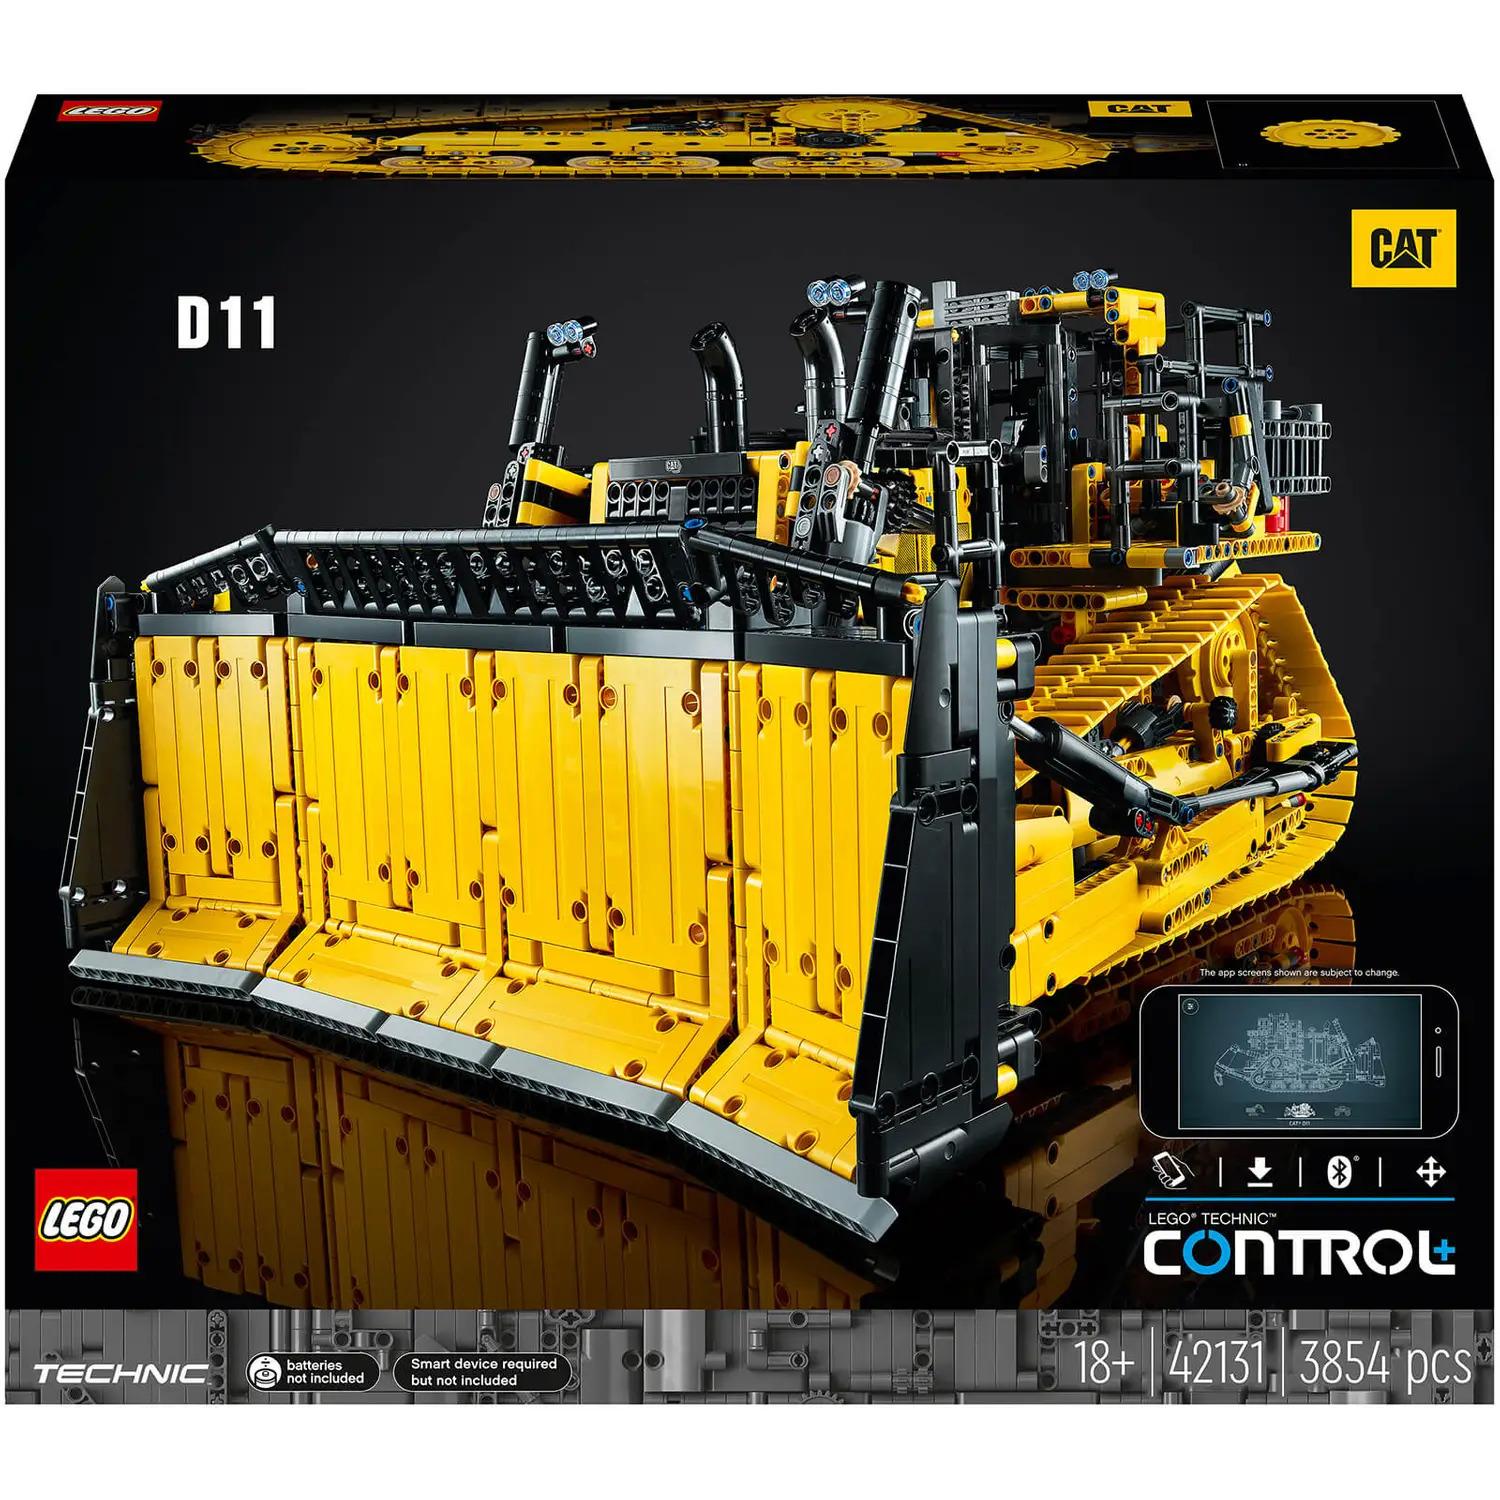 3854-Piece LEGO Technic Cat D11T Bulldozer Set for $369.99 Shipped